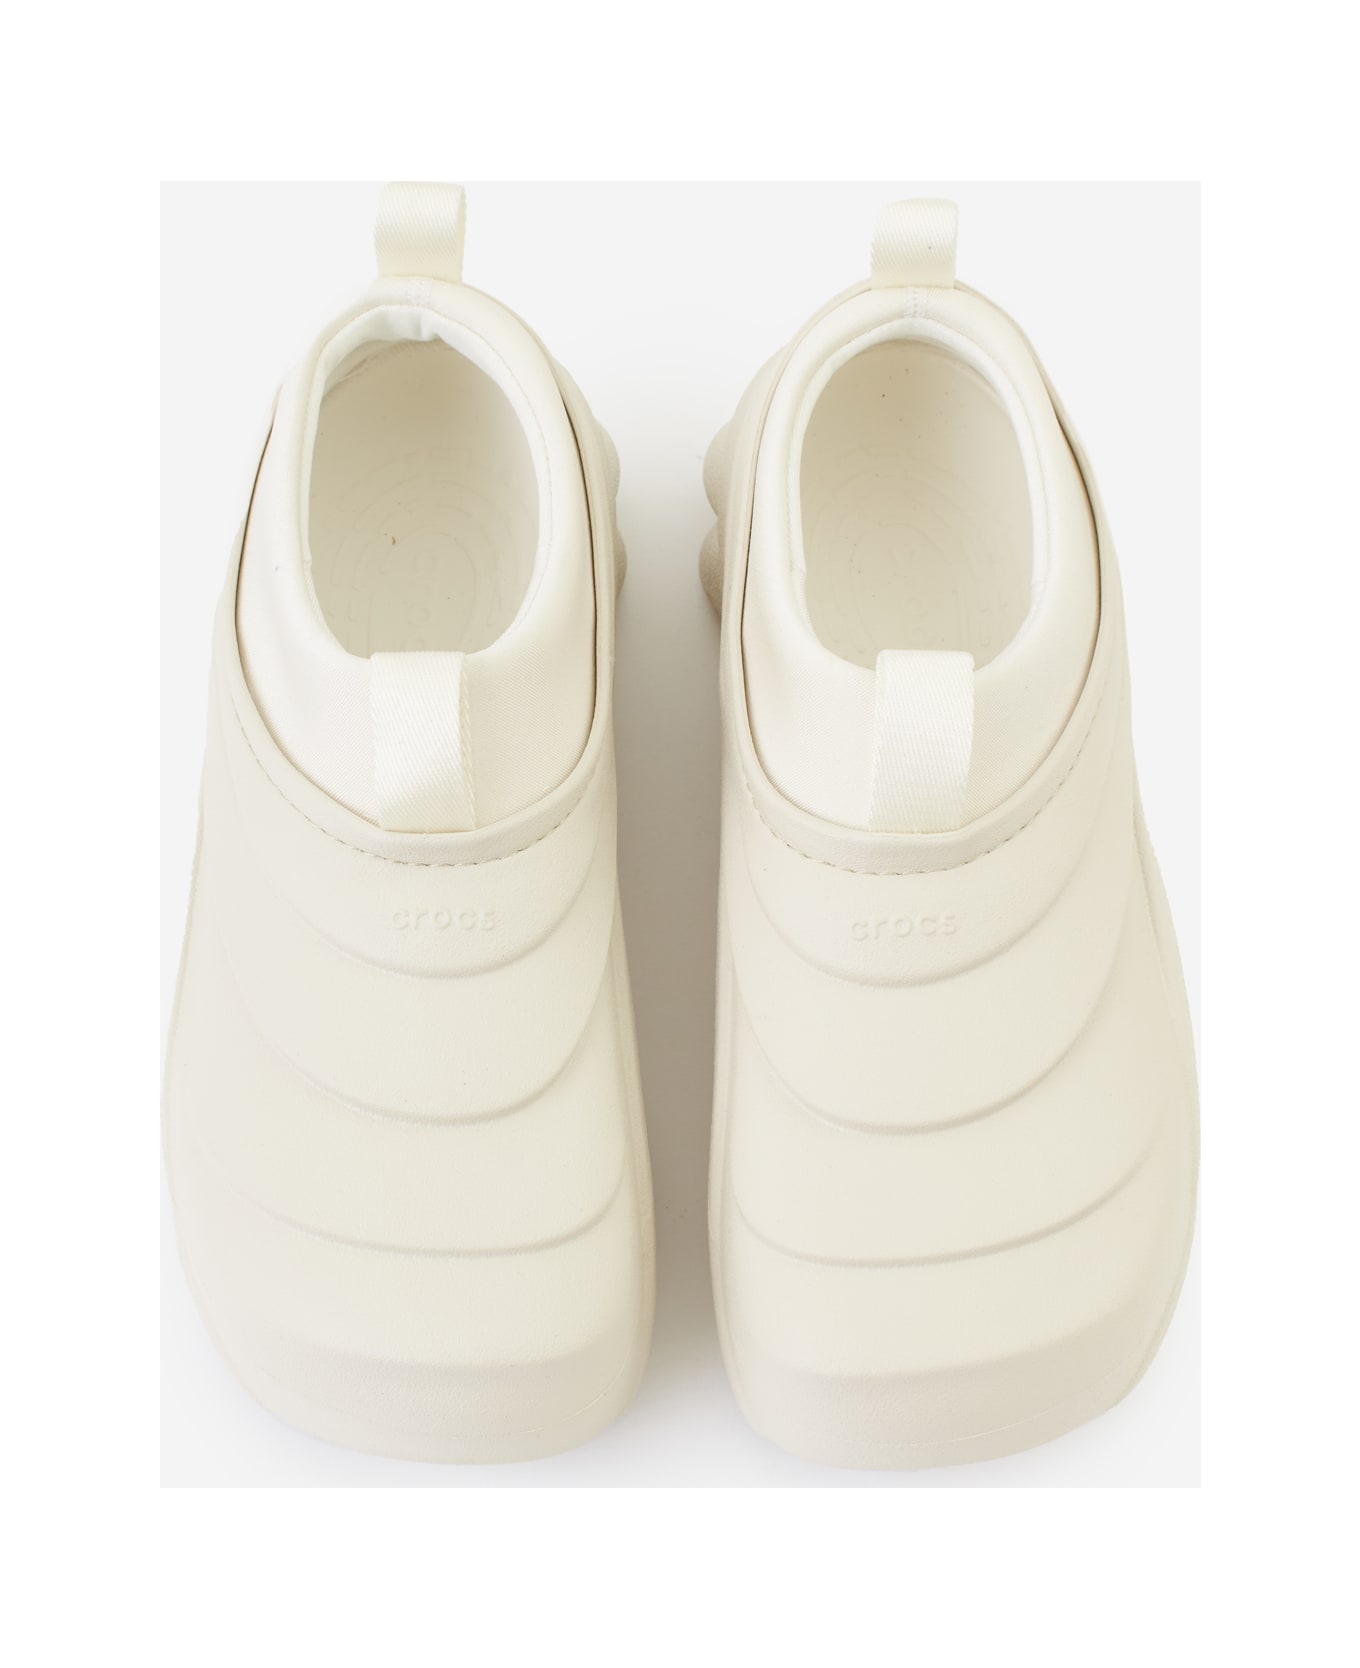 Crocs Echo Storm Shoes - white スニーカー